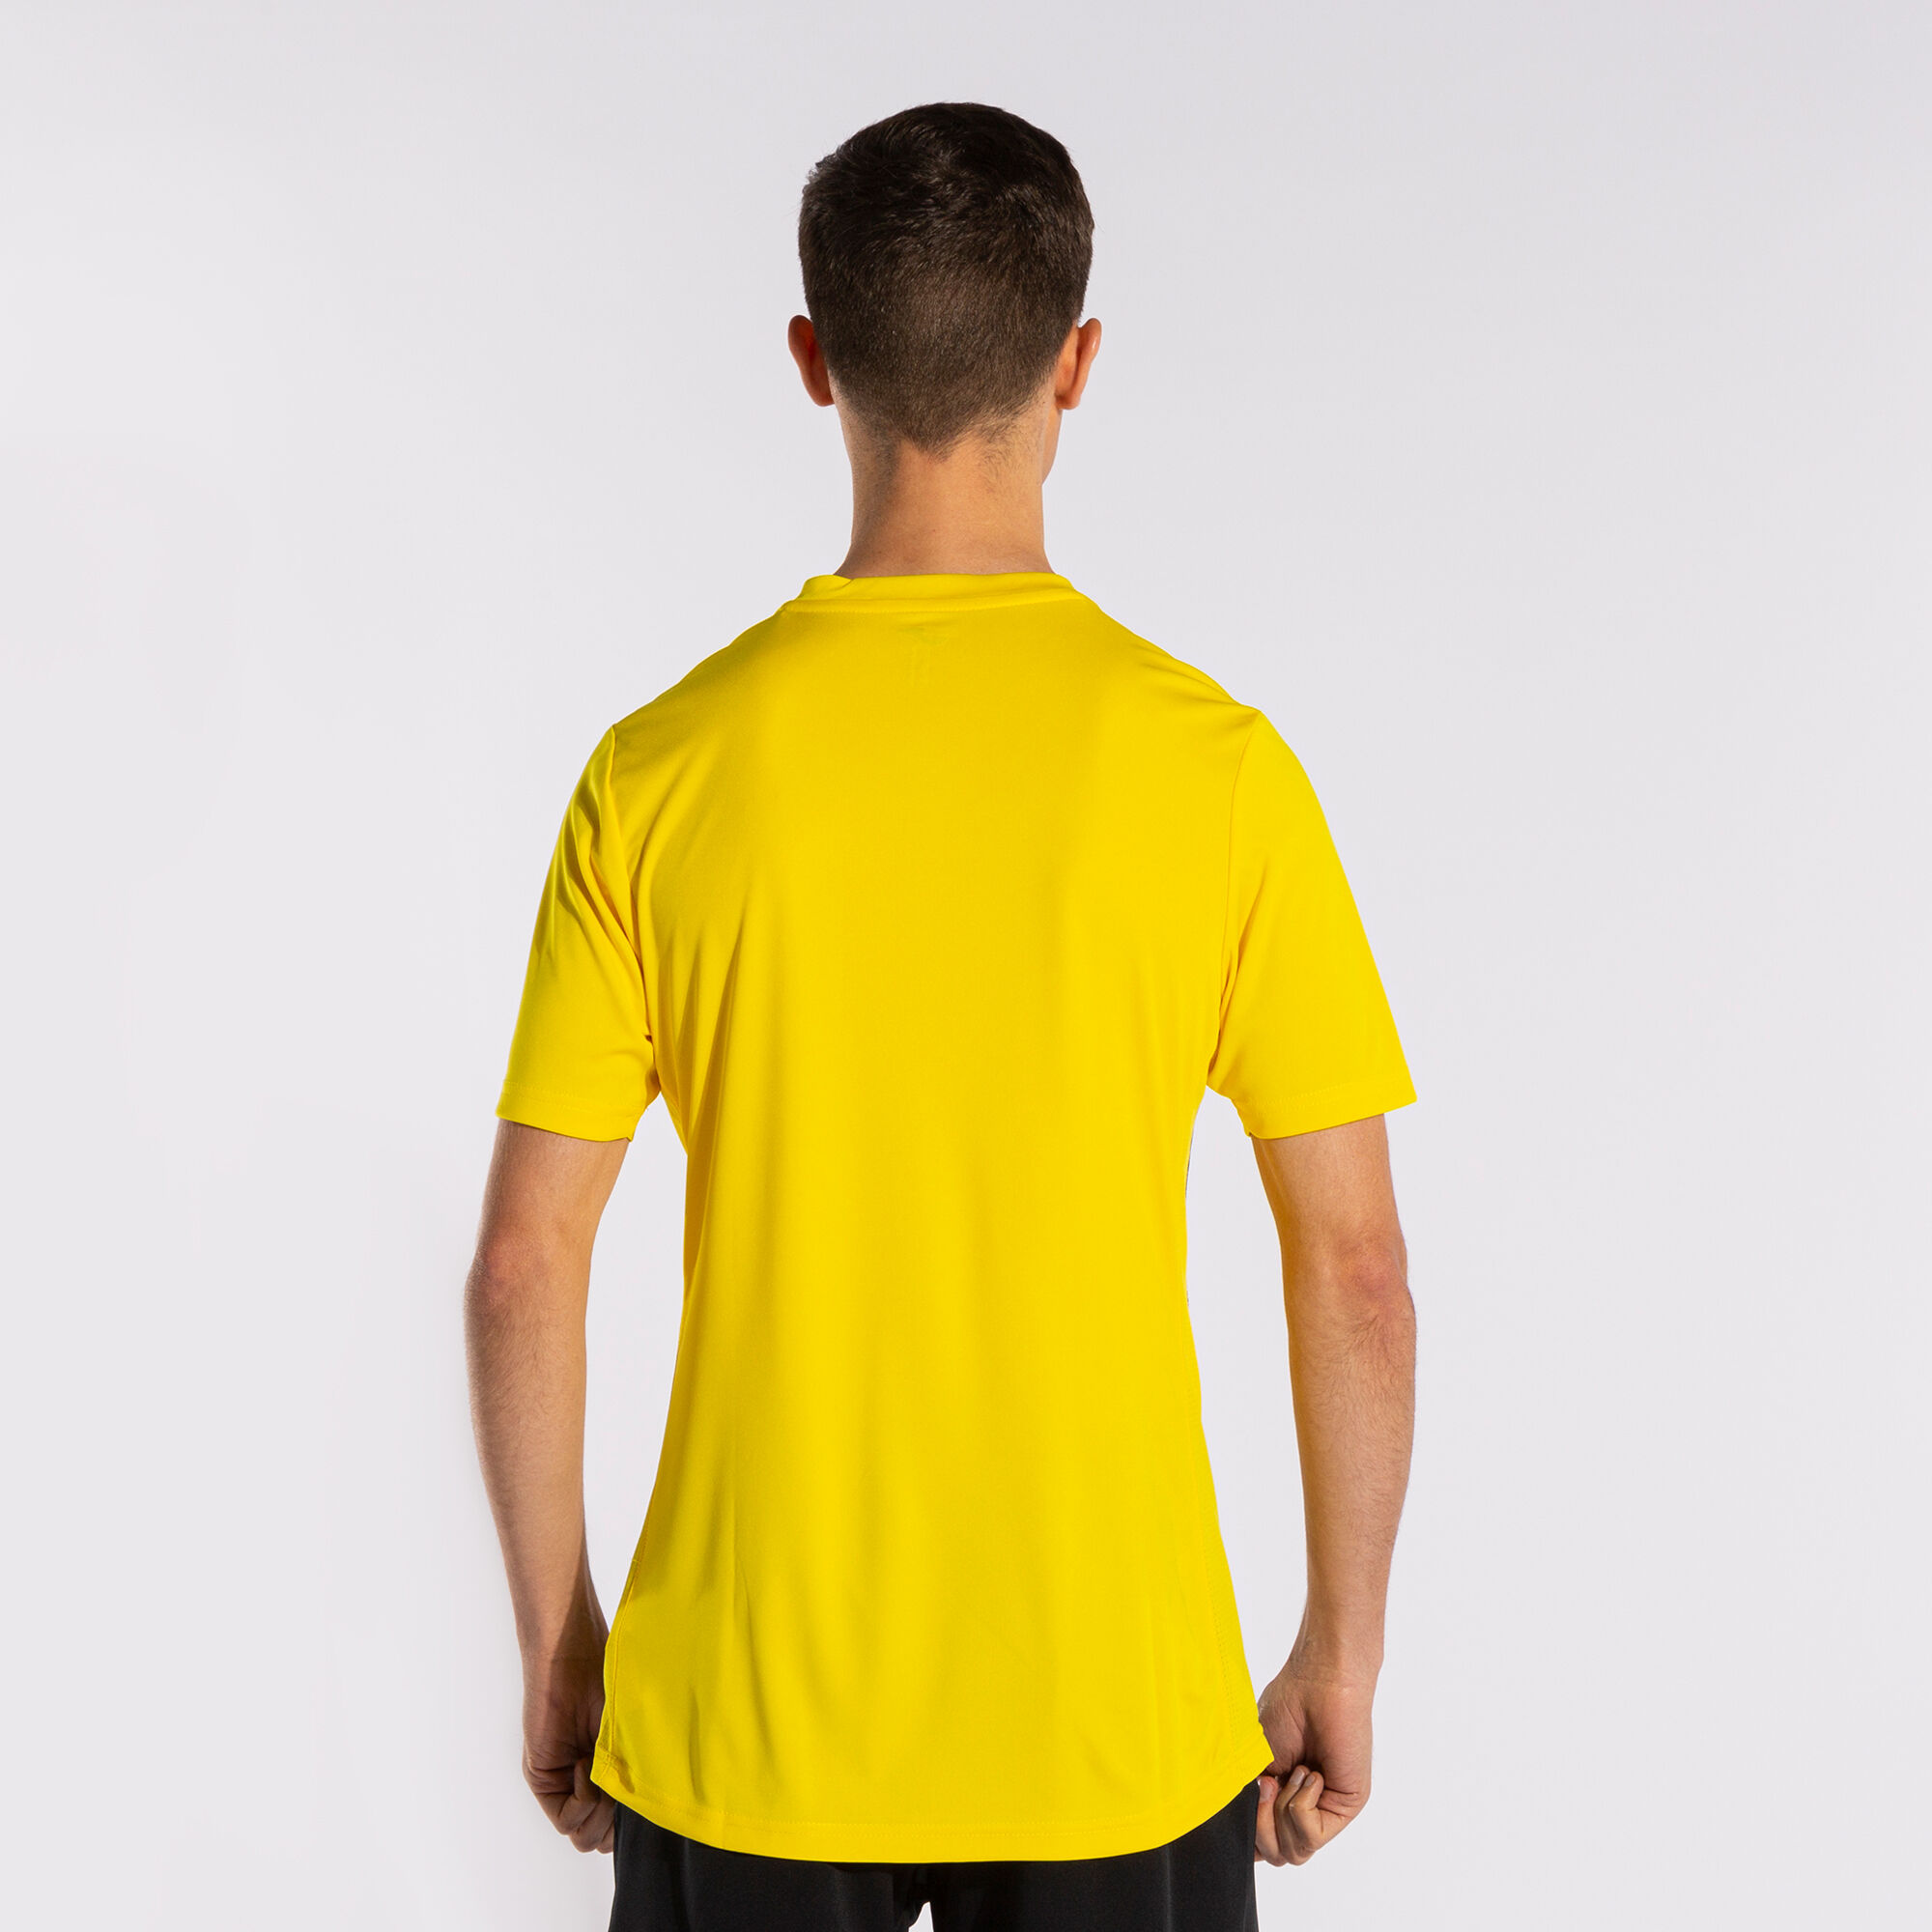 Shirt short sleeve man Inter II yellow black